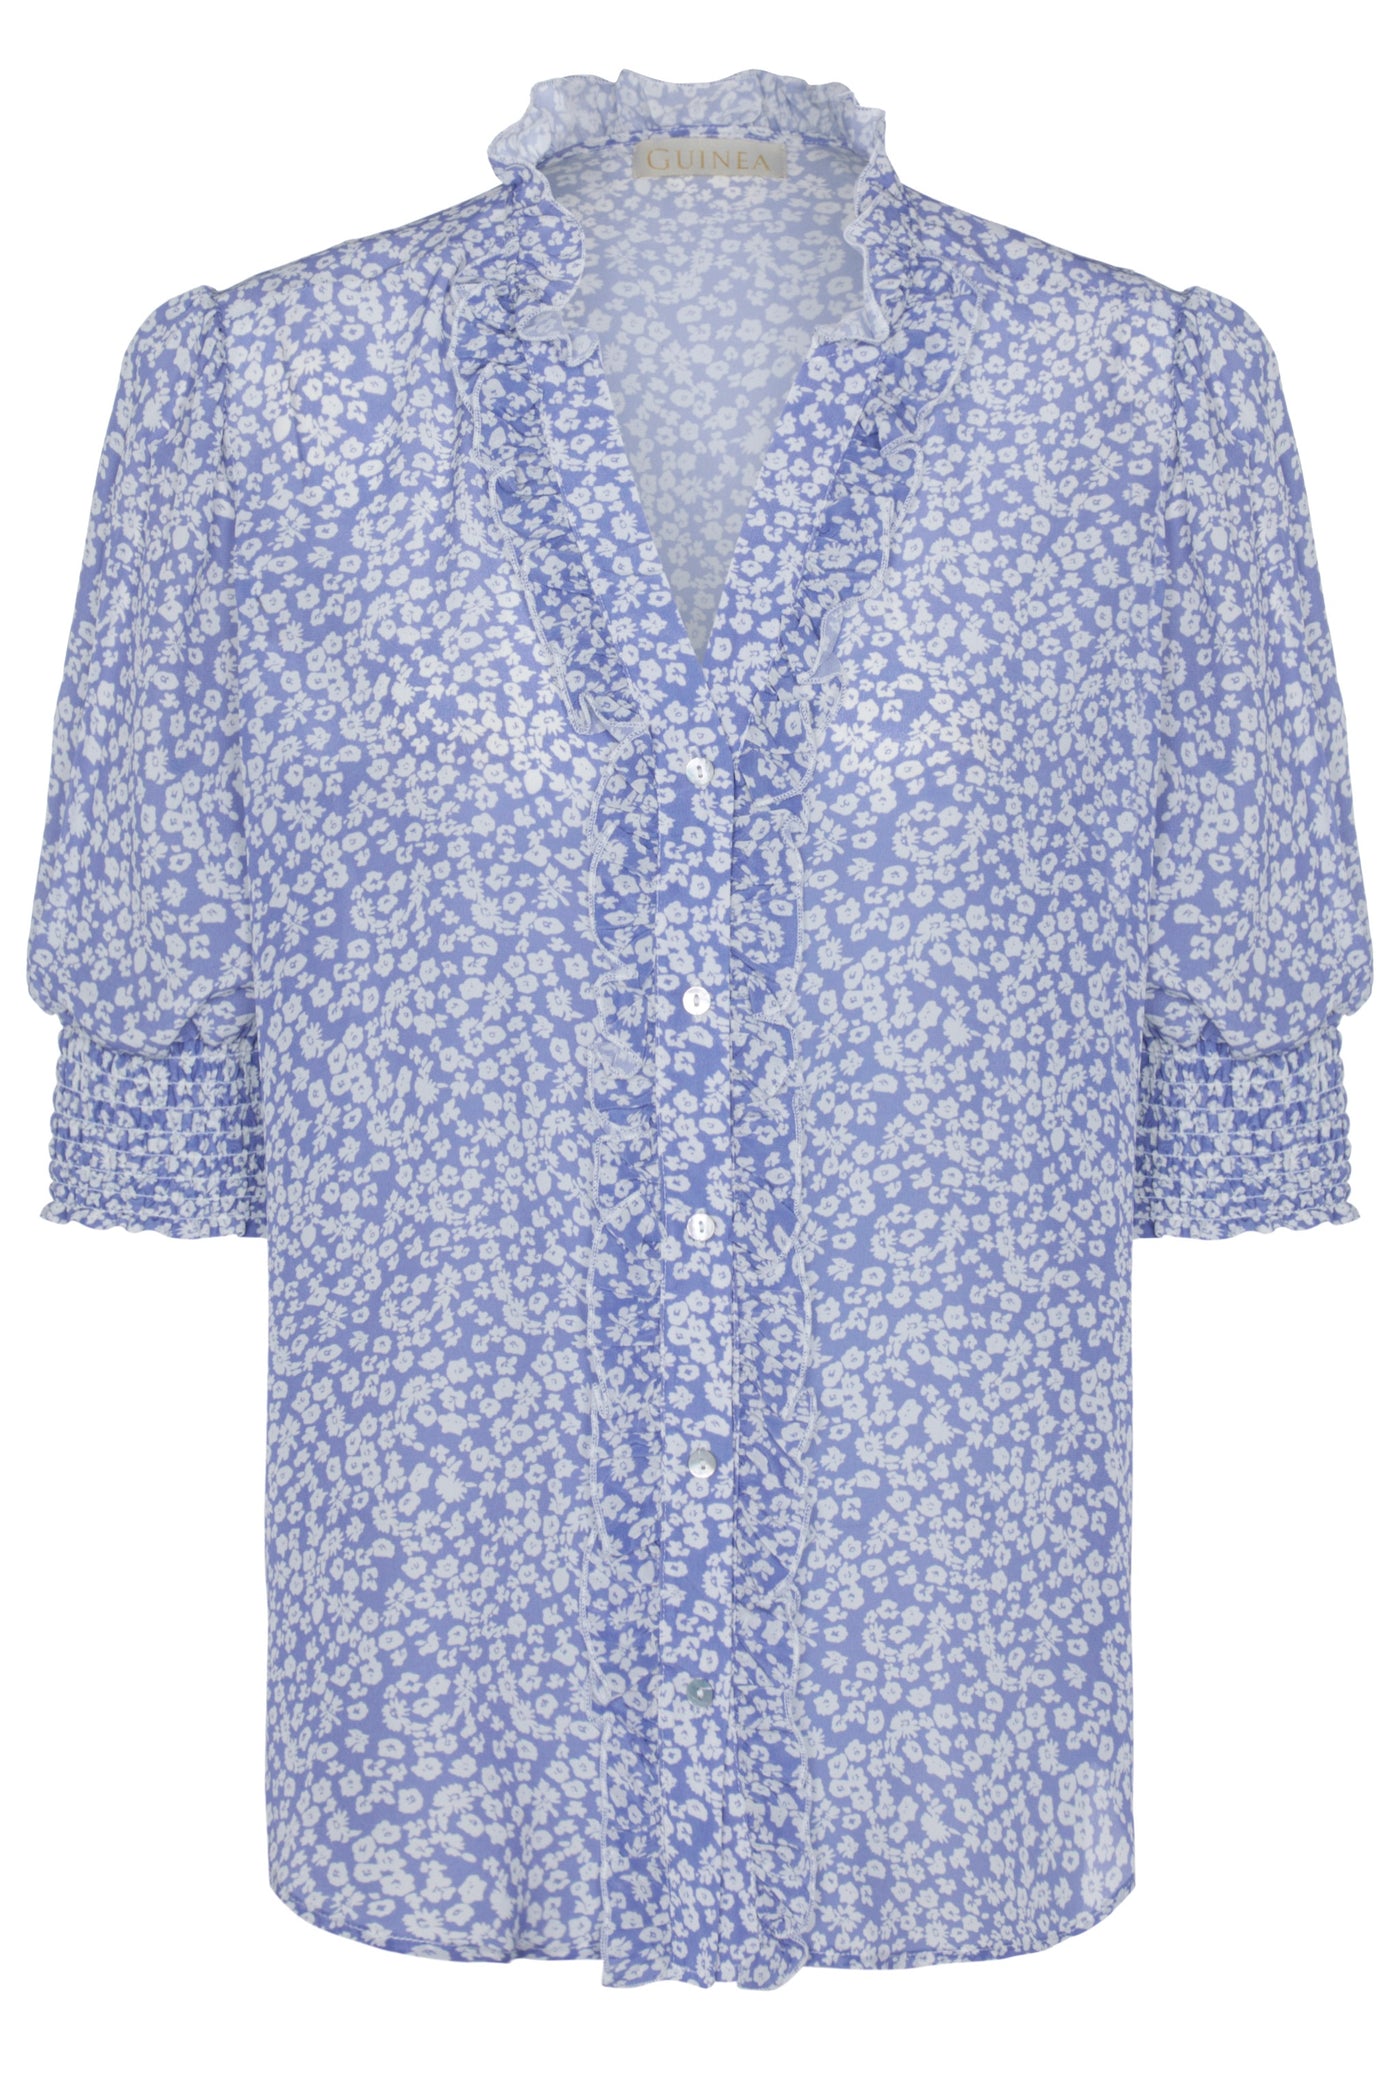 Women's pale blue summer shirt in pure silk